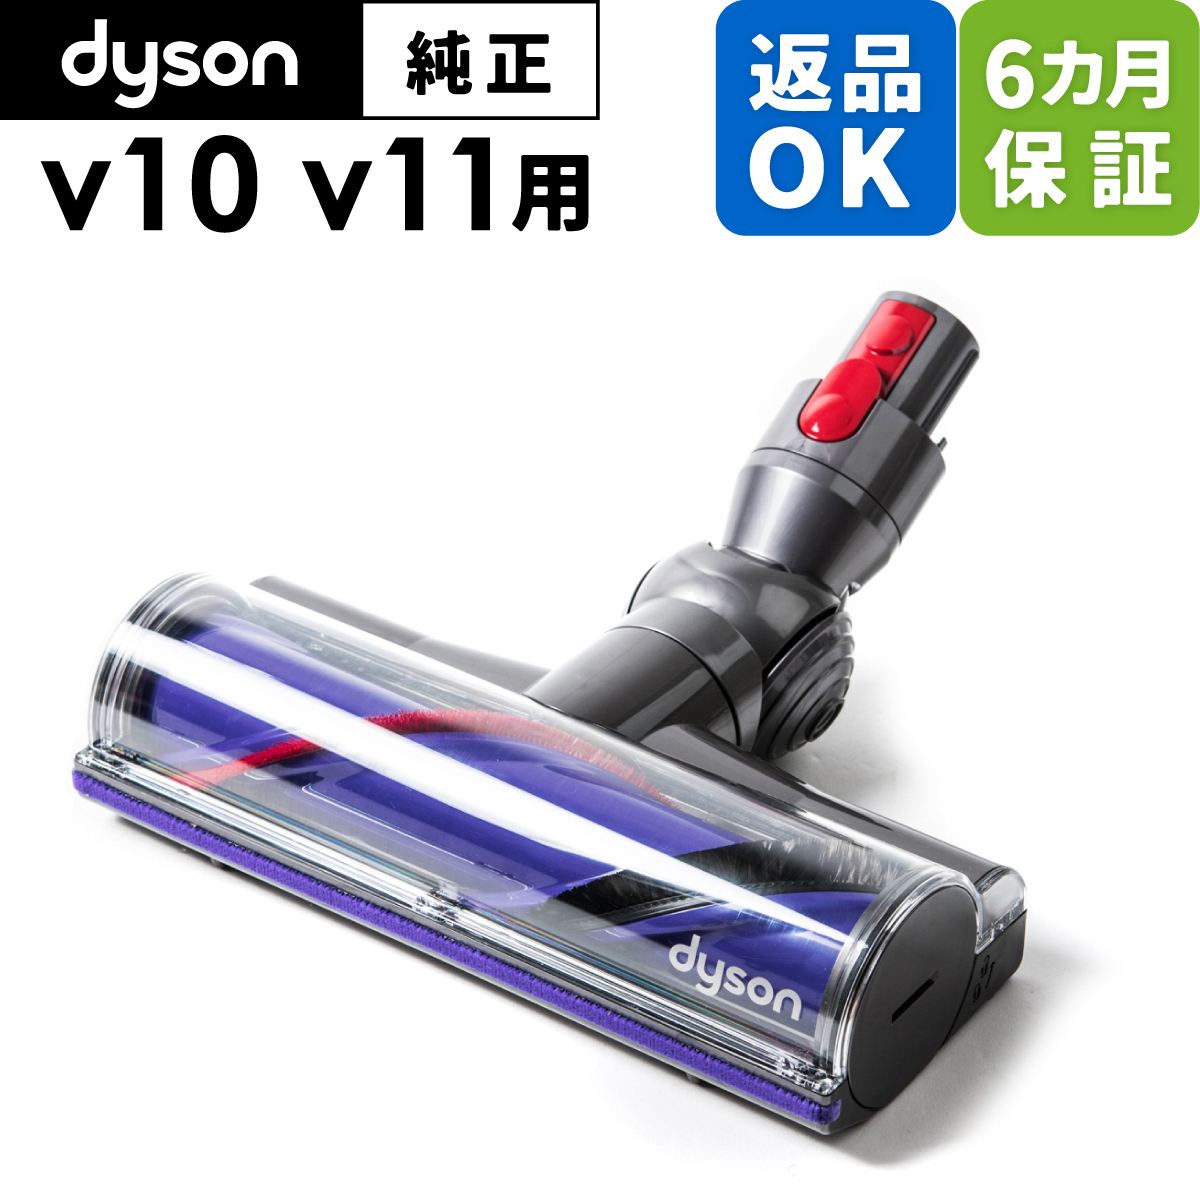 Dyson ダイソン 掃除機 純正 パーツ 返品OK 6カ月保証 ダイレクトドライブクリーナーヘッド V10 V11 適合 モデル 部品 交換